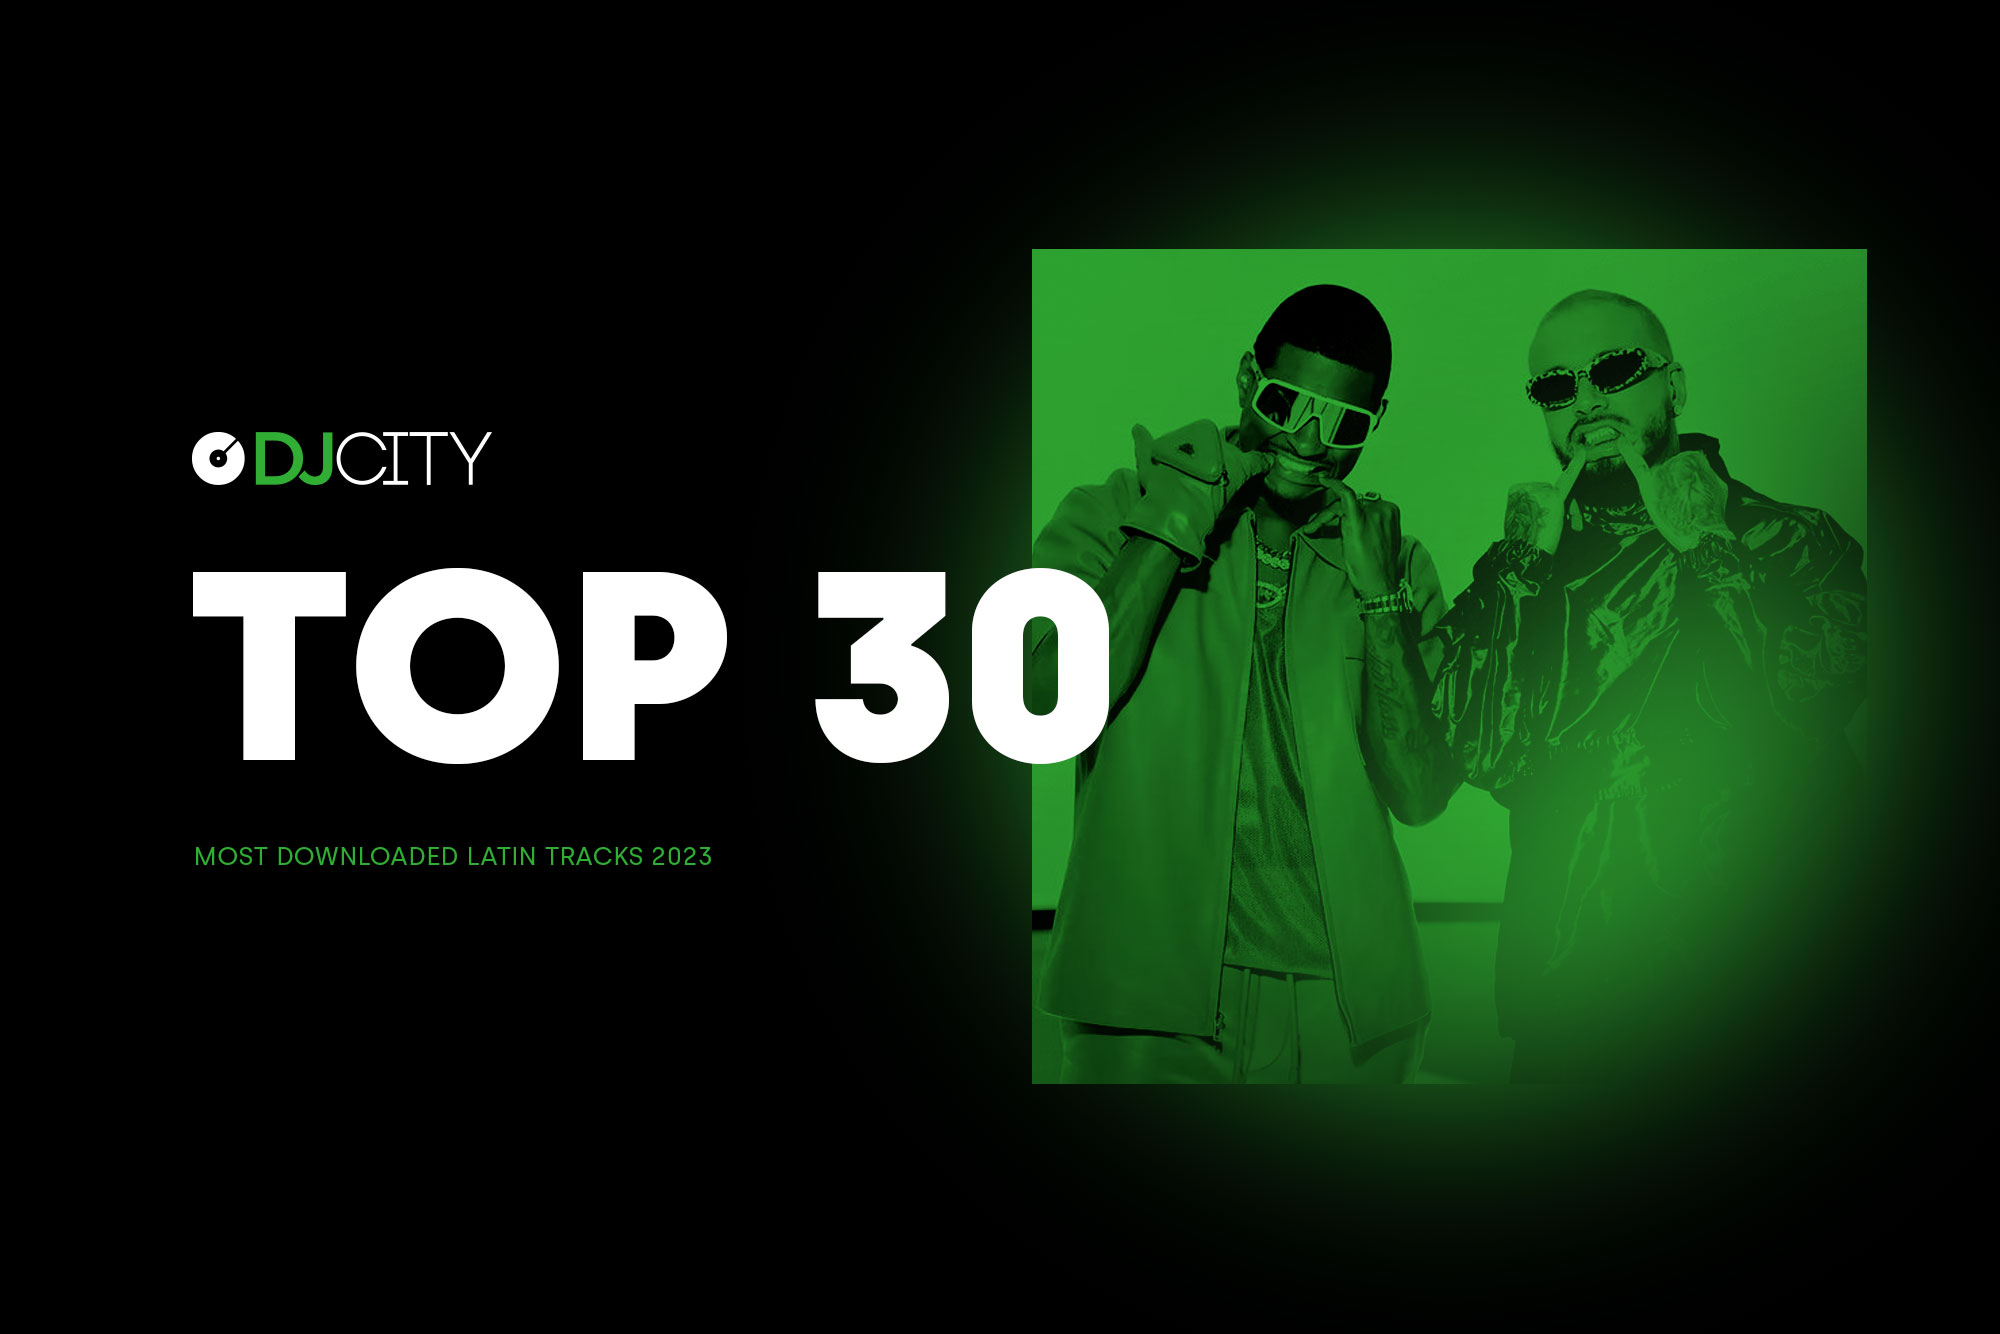 DJcity’s 30 Most Downloaded Latin Tracks of 2023